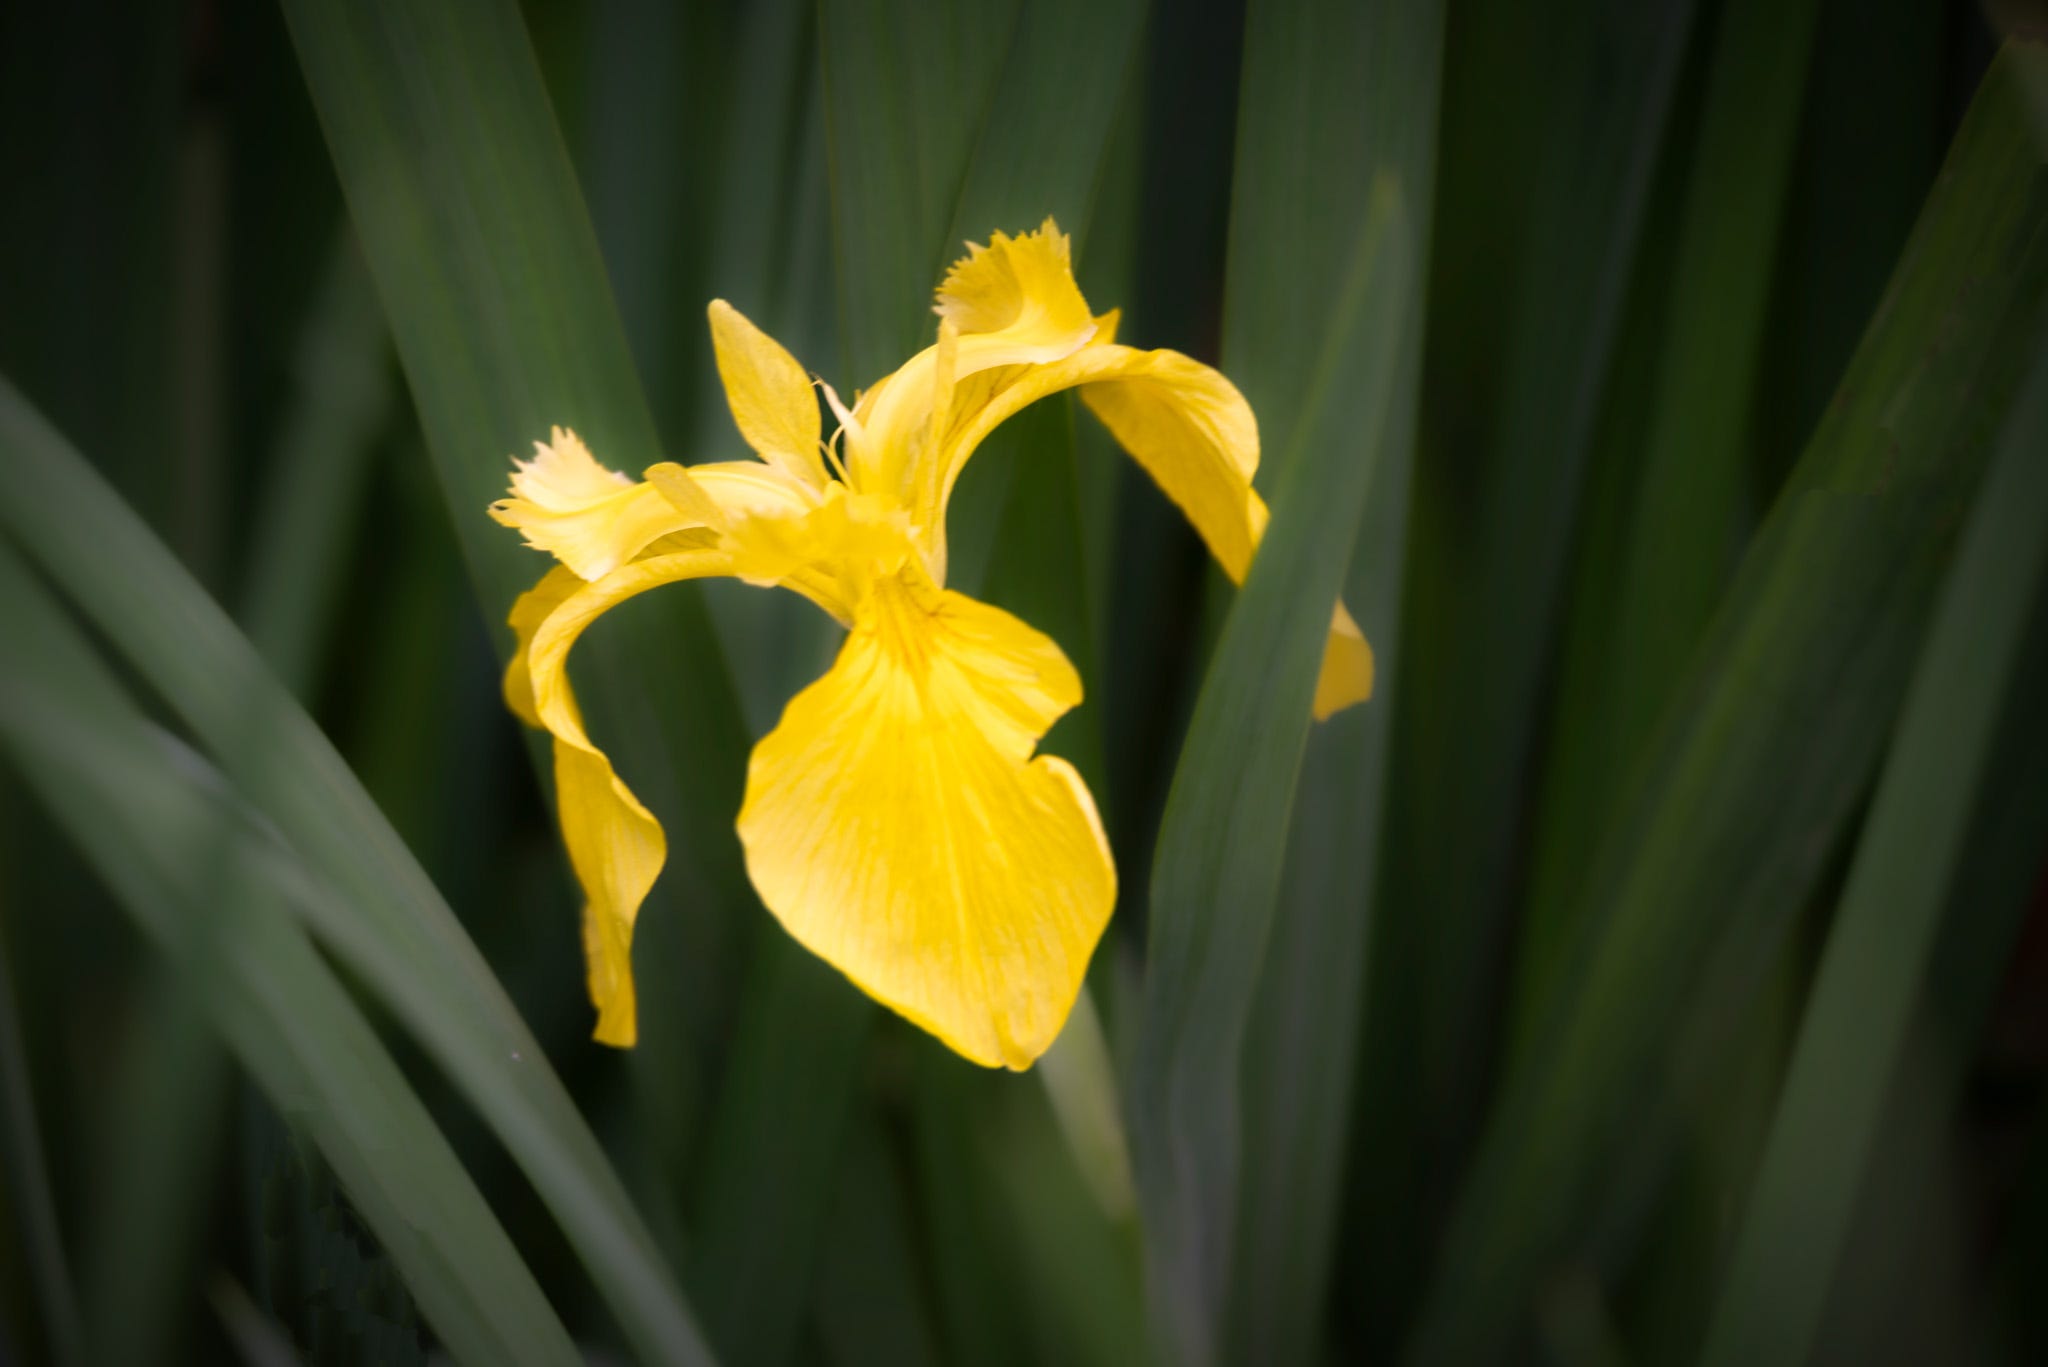 A single yellow iris bloom among the dark green fronds